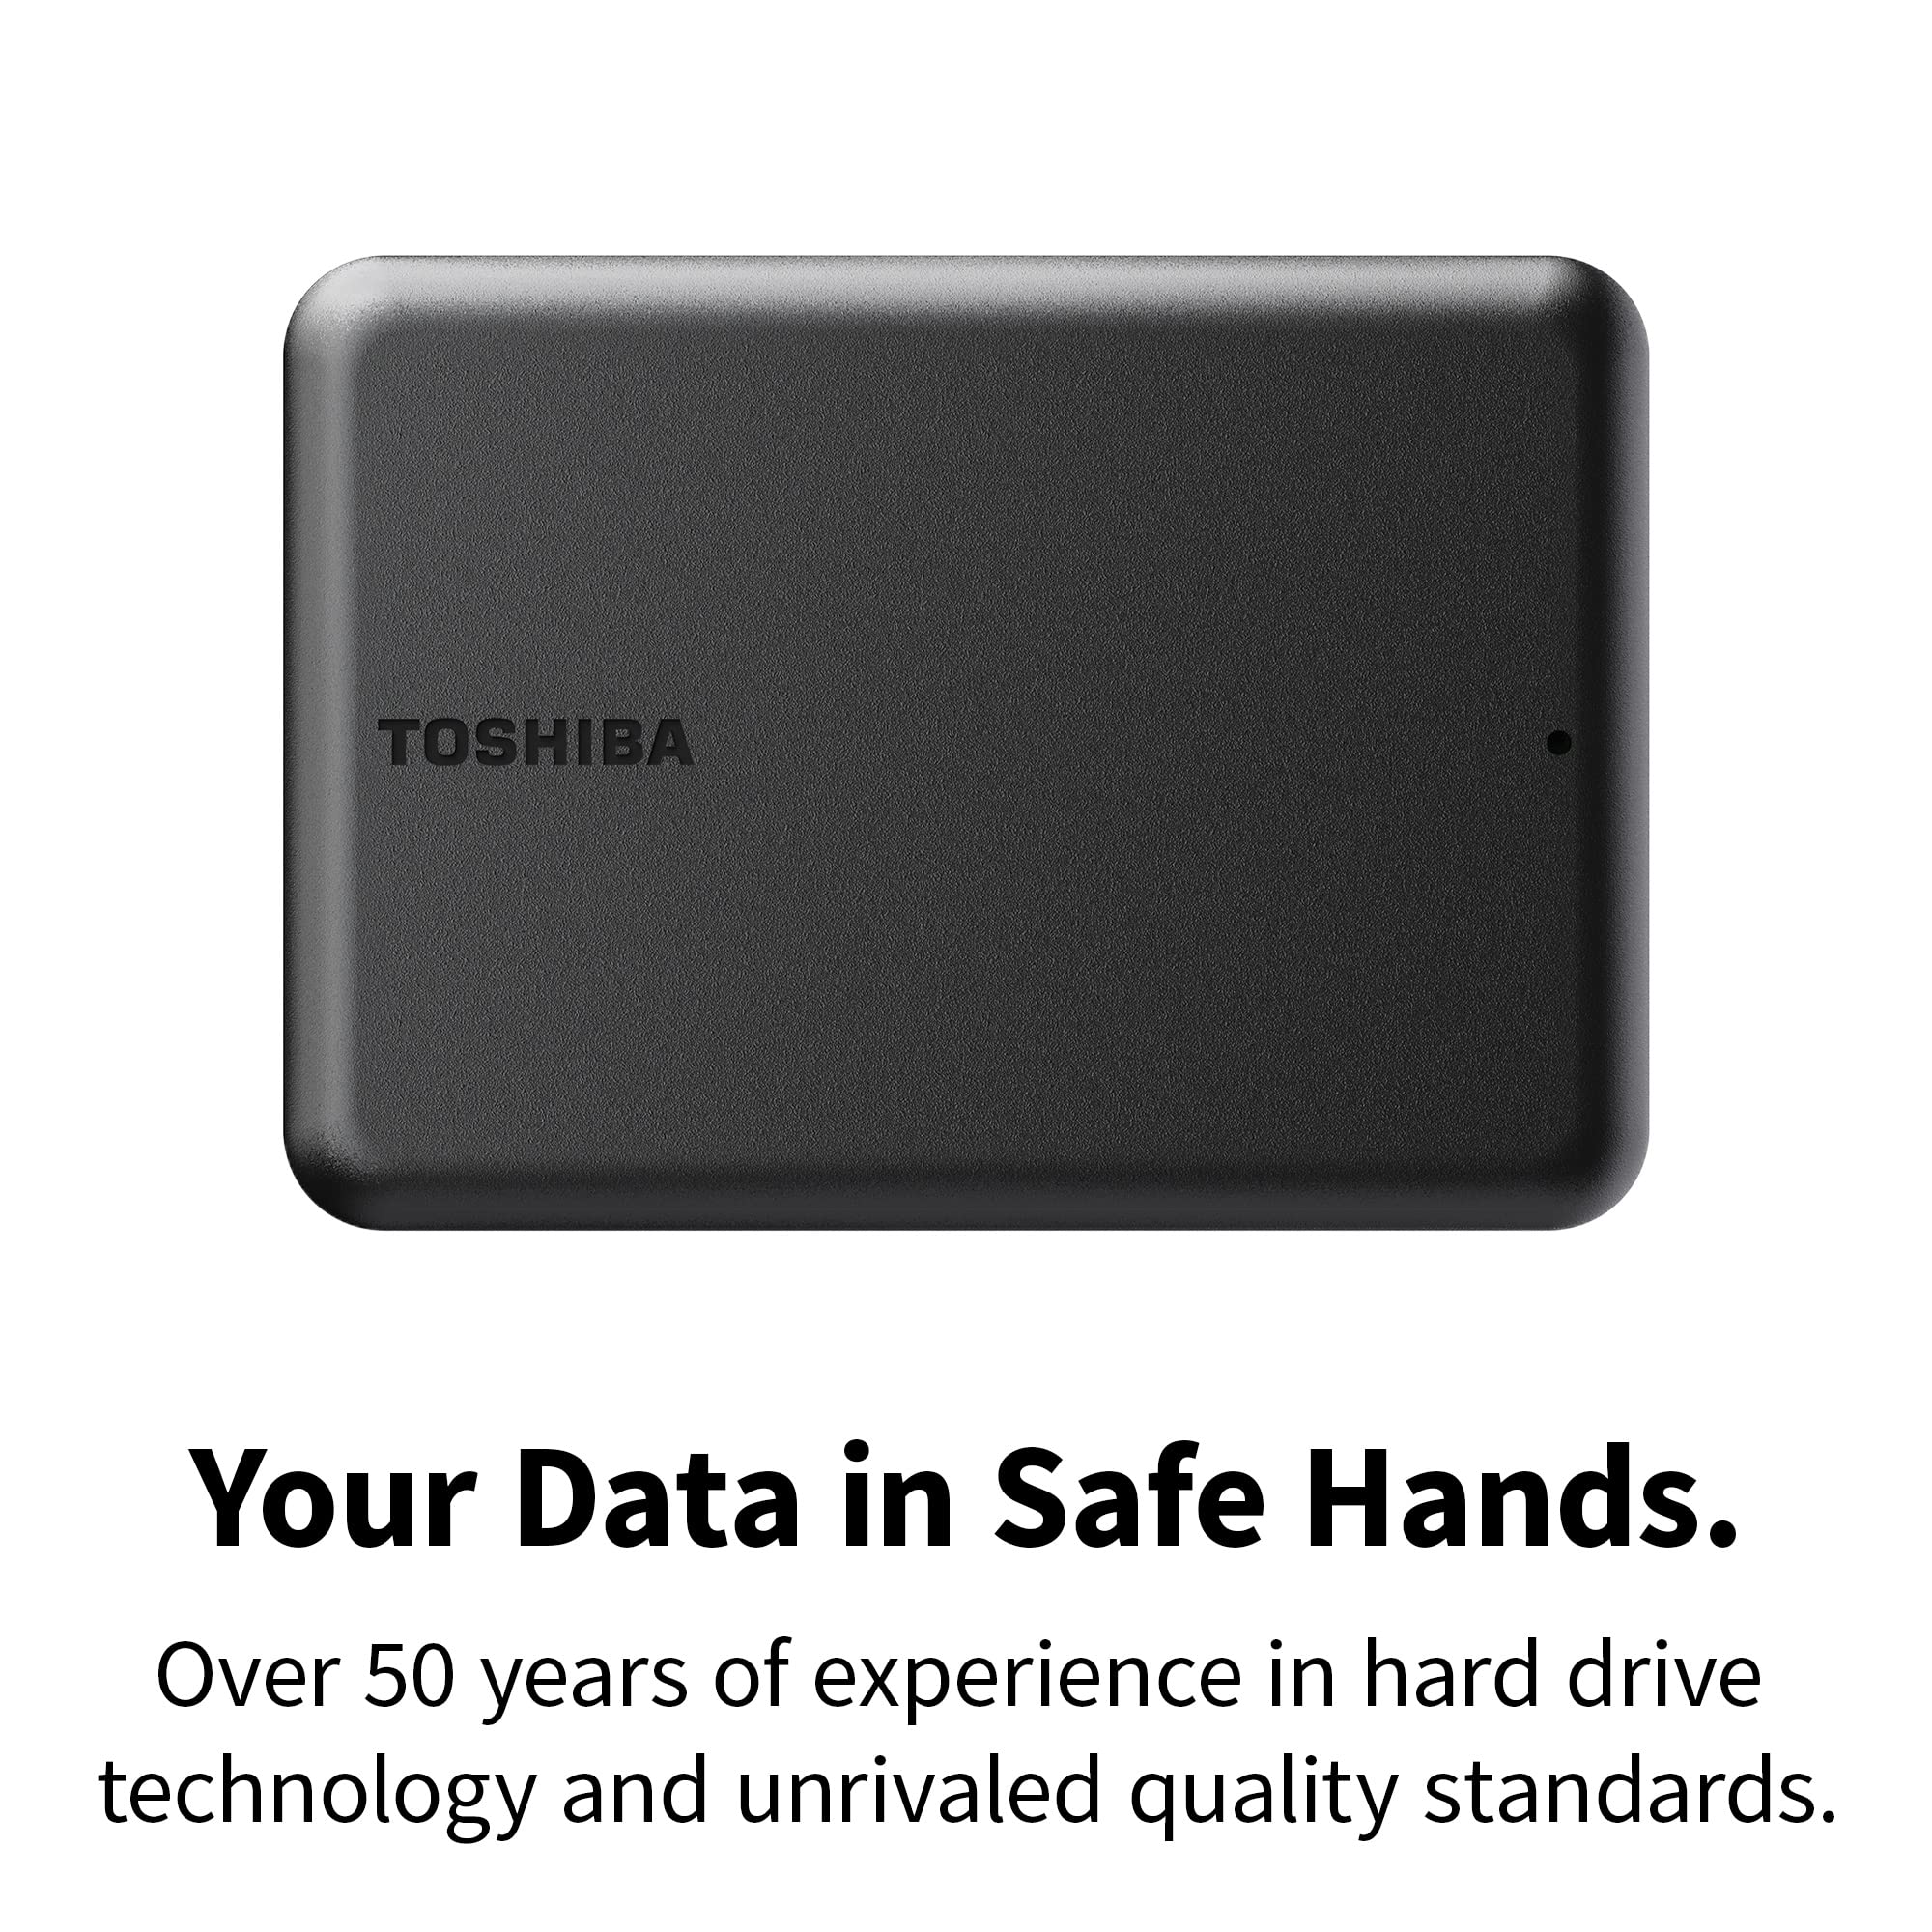 Toshiba Canvio Partner 2TB Portable 2.5